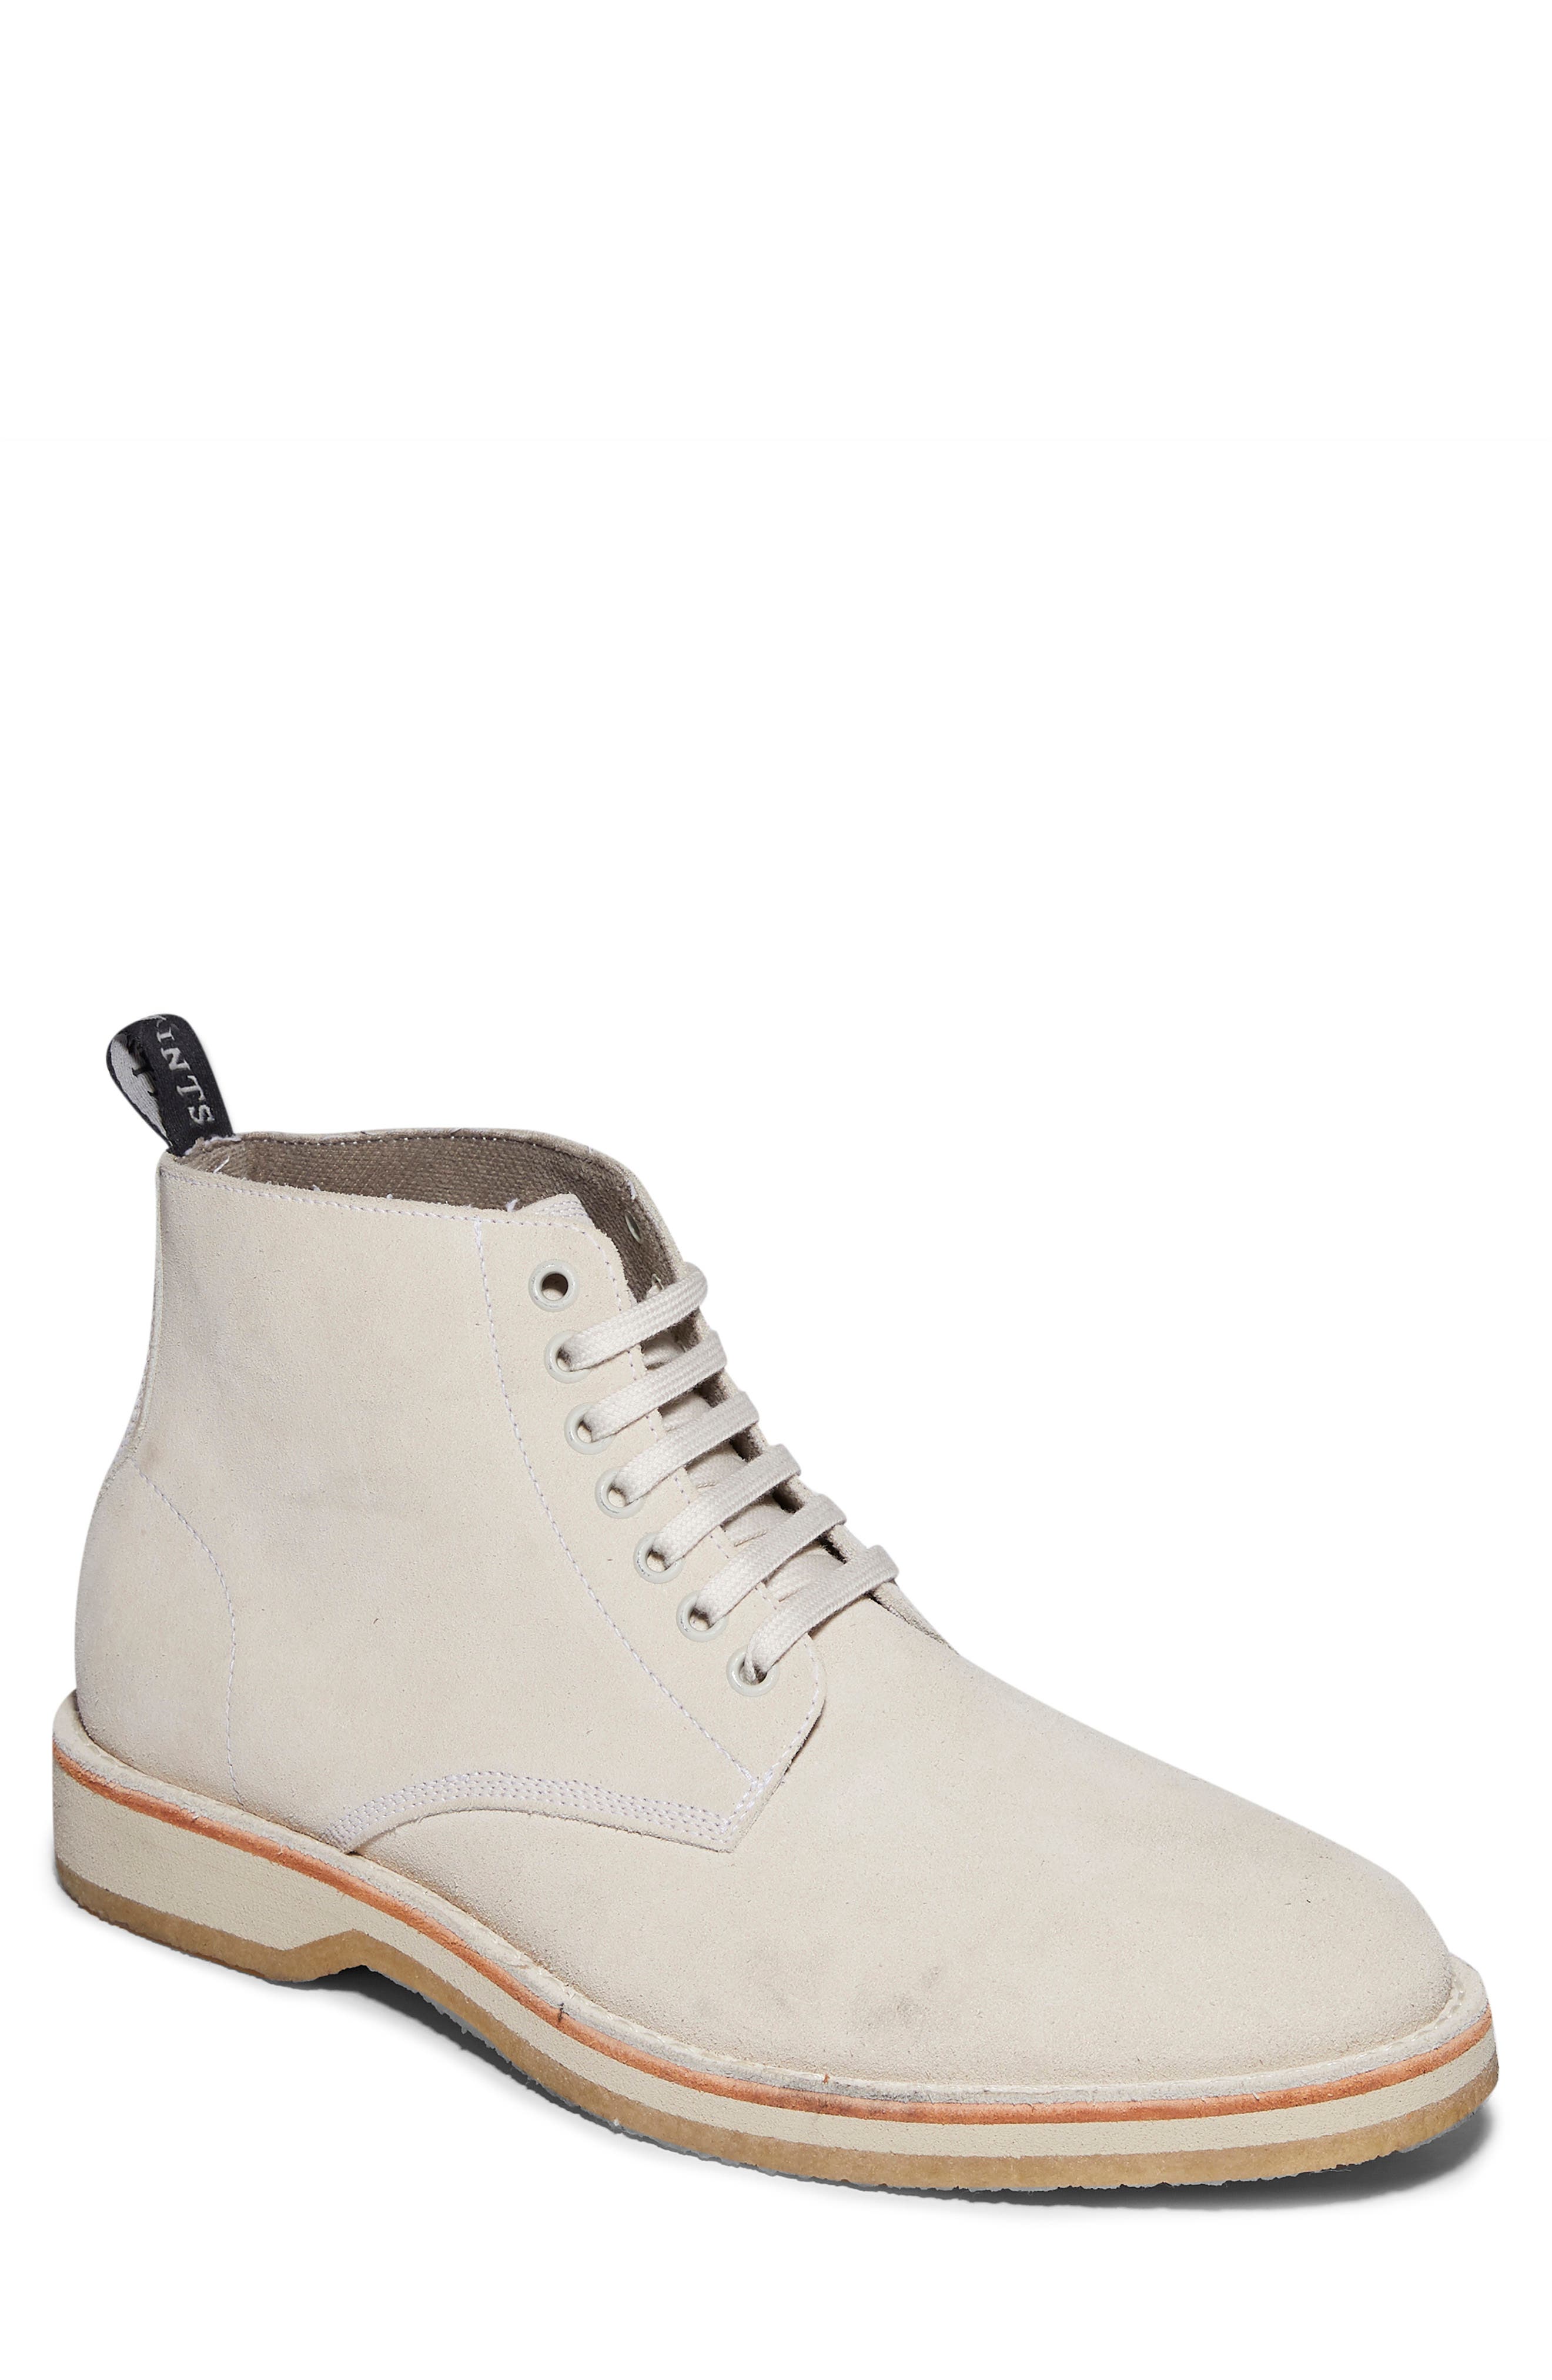 Buy > men's white dress boots > in stock